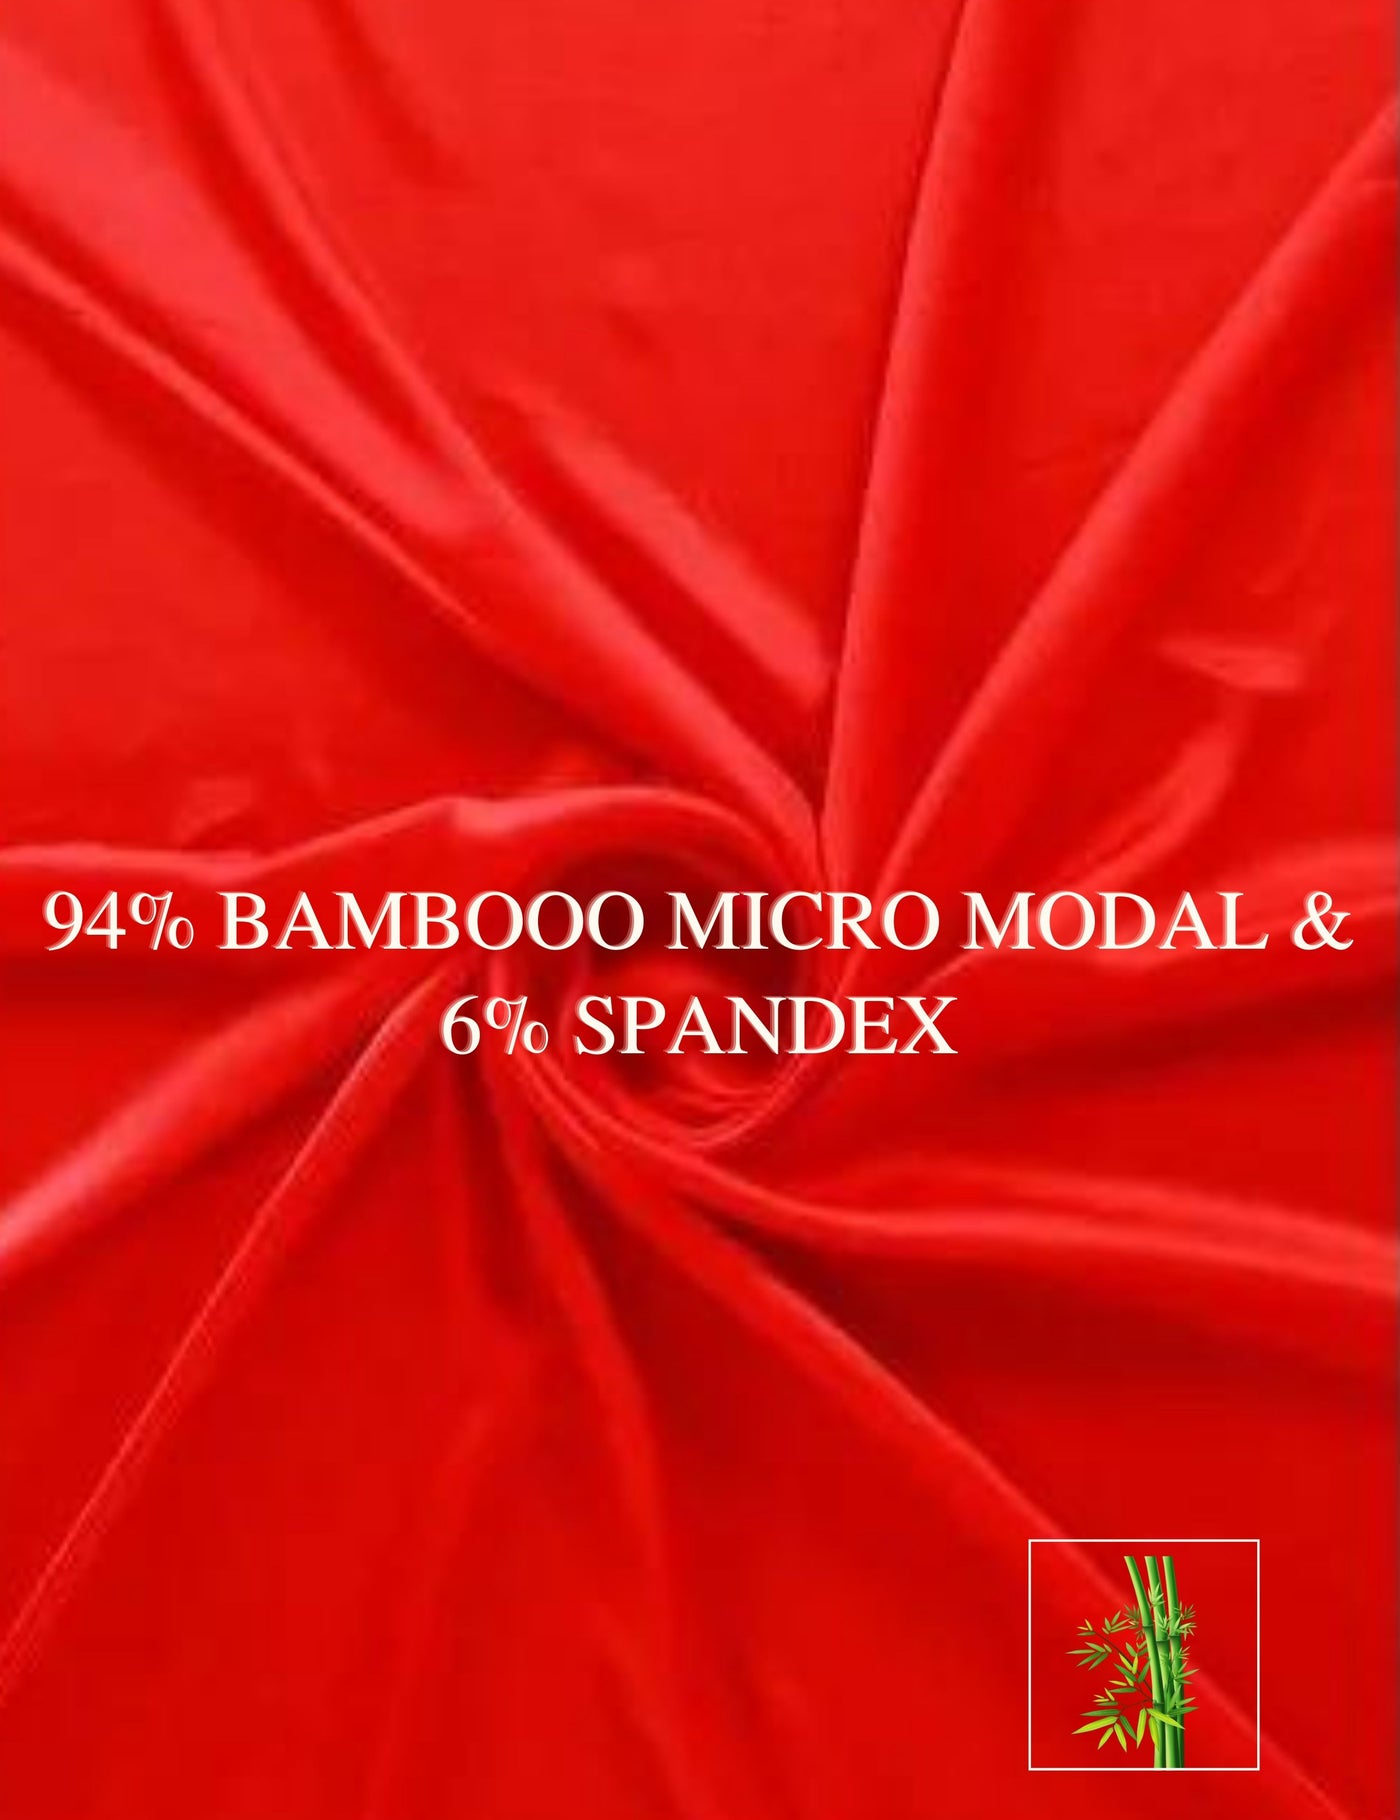 Buy online Bikini Bamboo Micro Modal, Antibacterial, Premium Women Panty  from lingerie for Women by Ashleyandalvis for ₹649 at 27% off